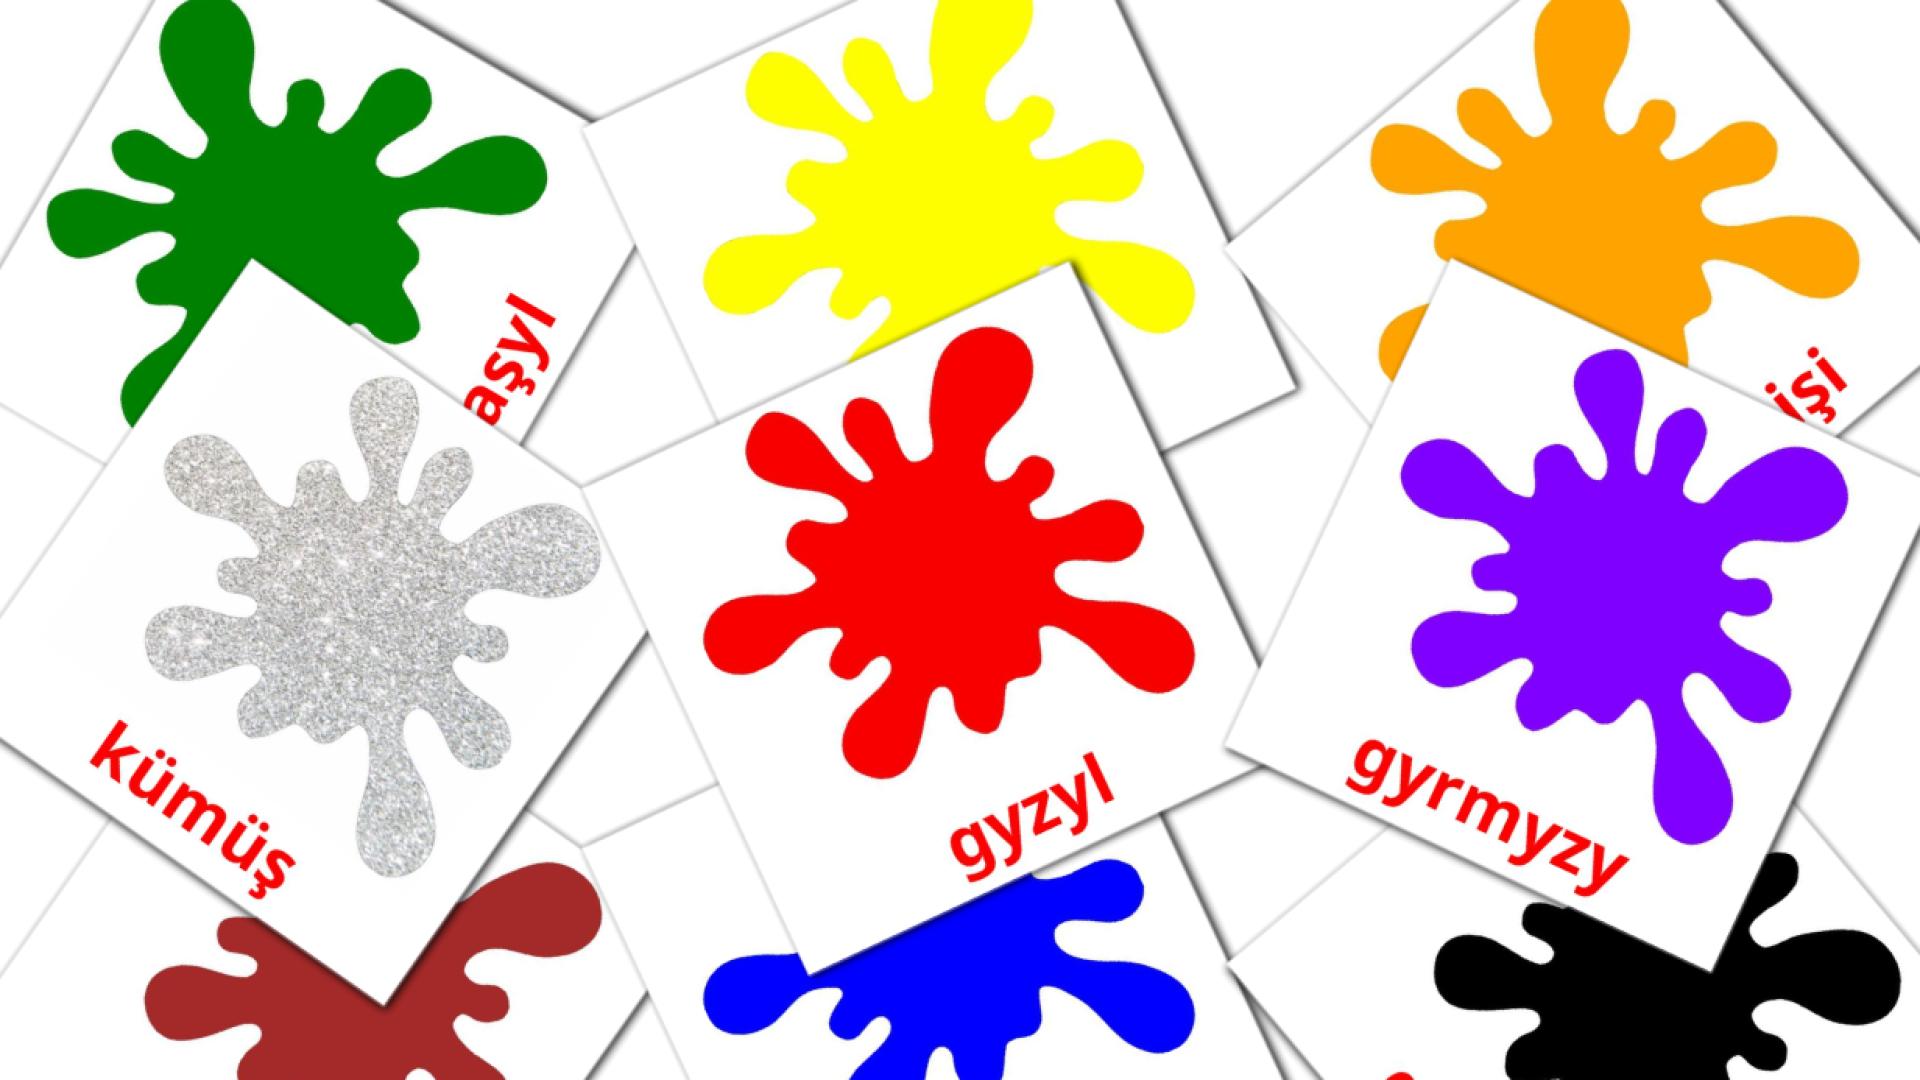 Reňkler we şekiller turken woordenschat flashcards